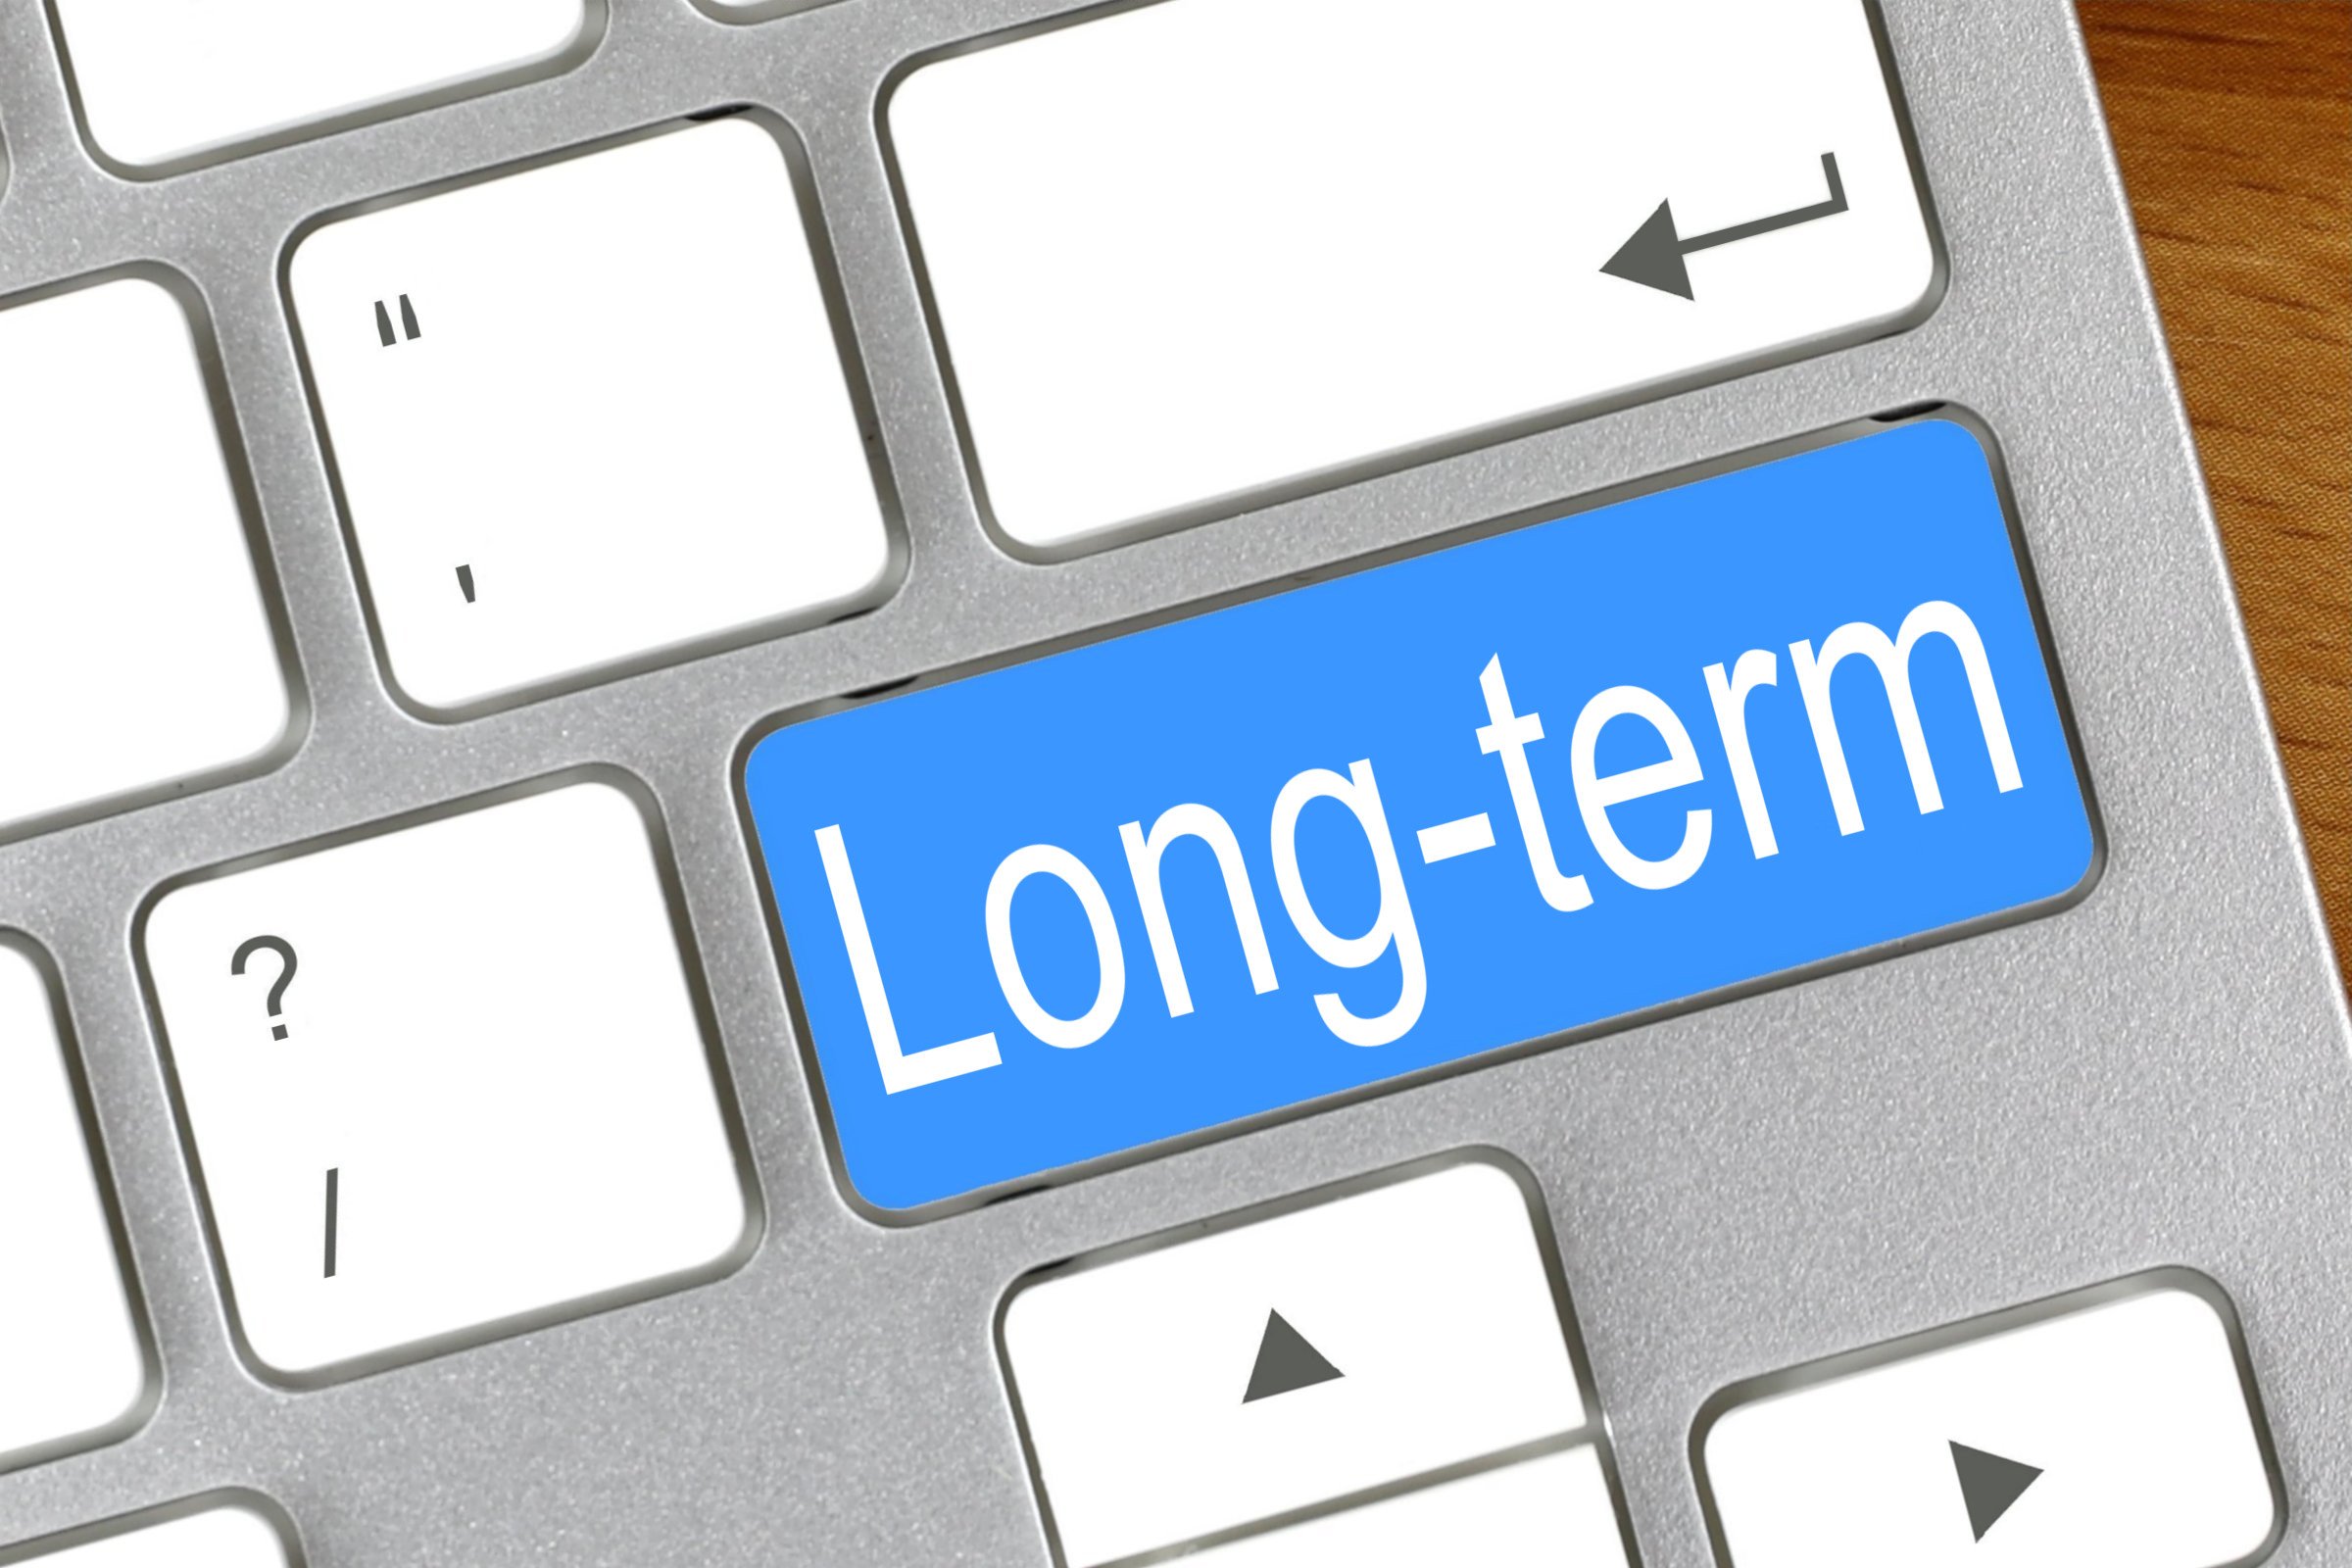 long term